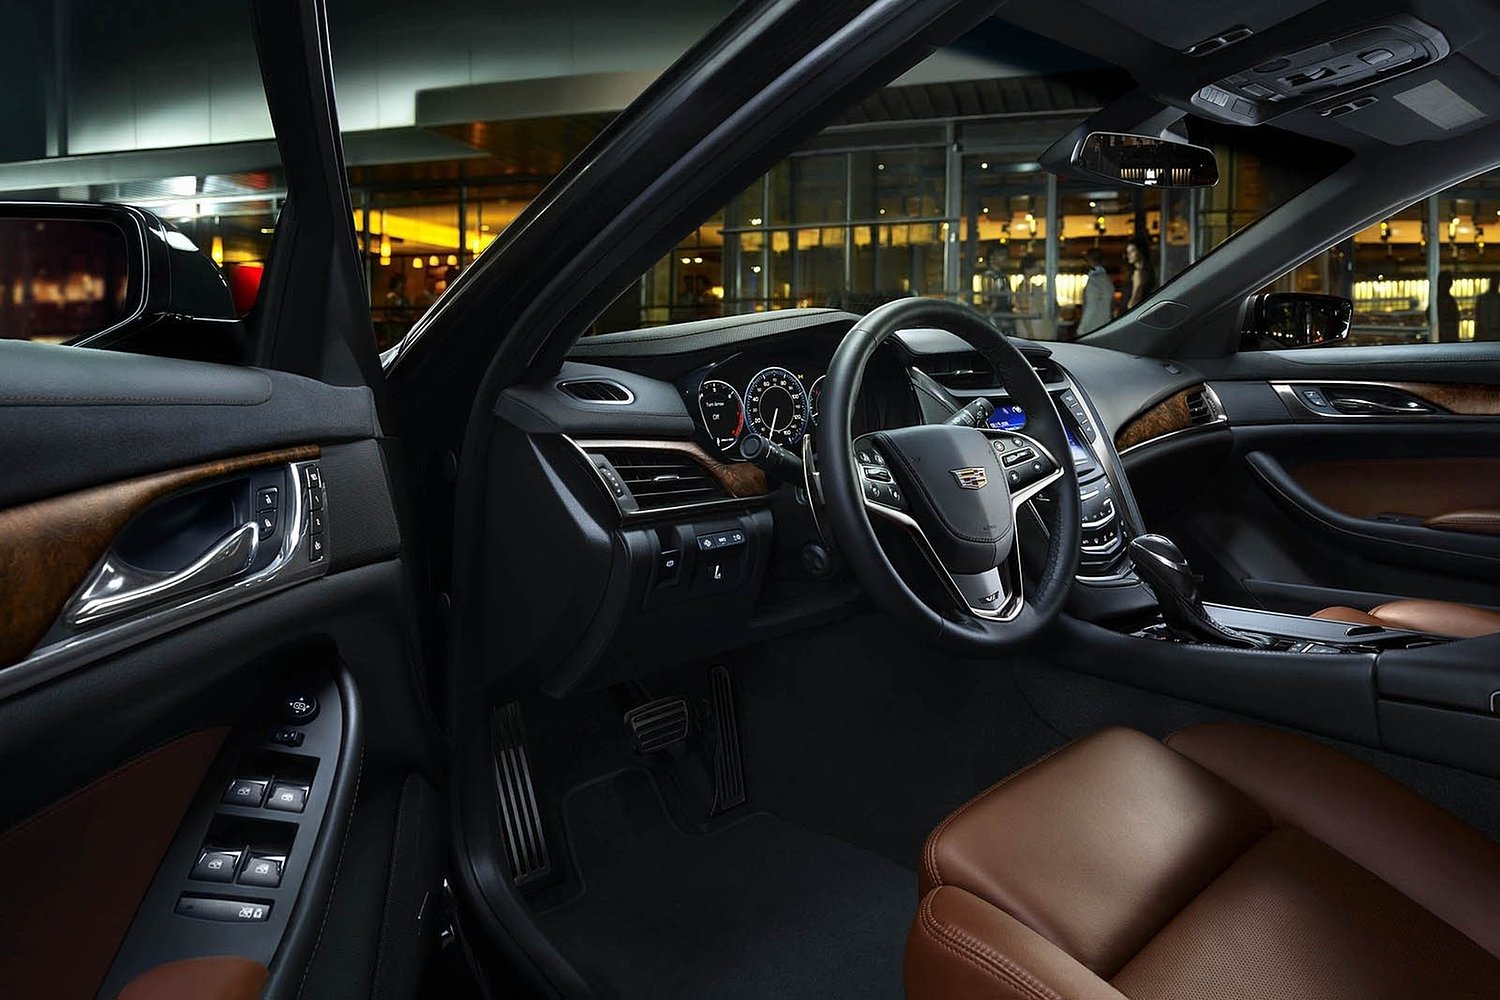 2018 Cadillac CTS V-Sport Premium Luxury Sedan Interior Shown